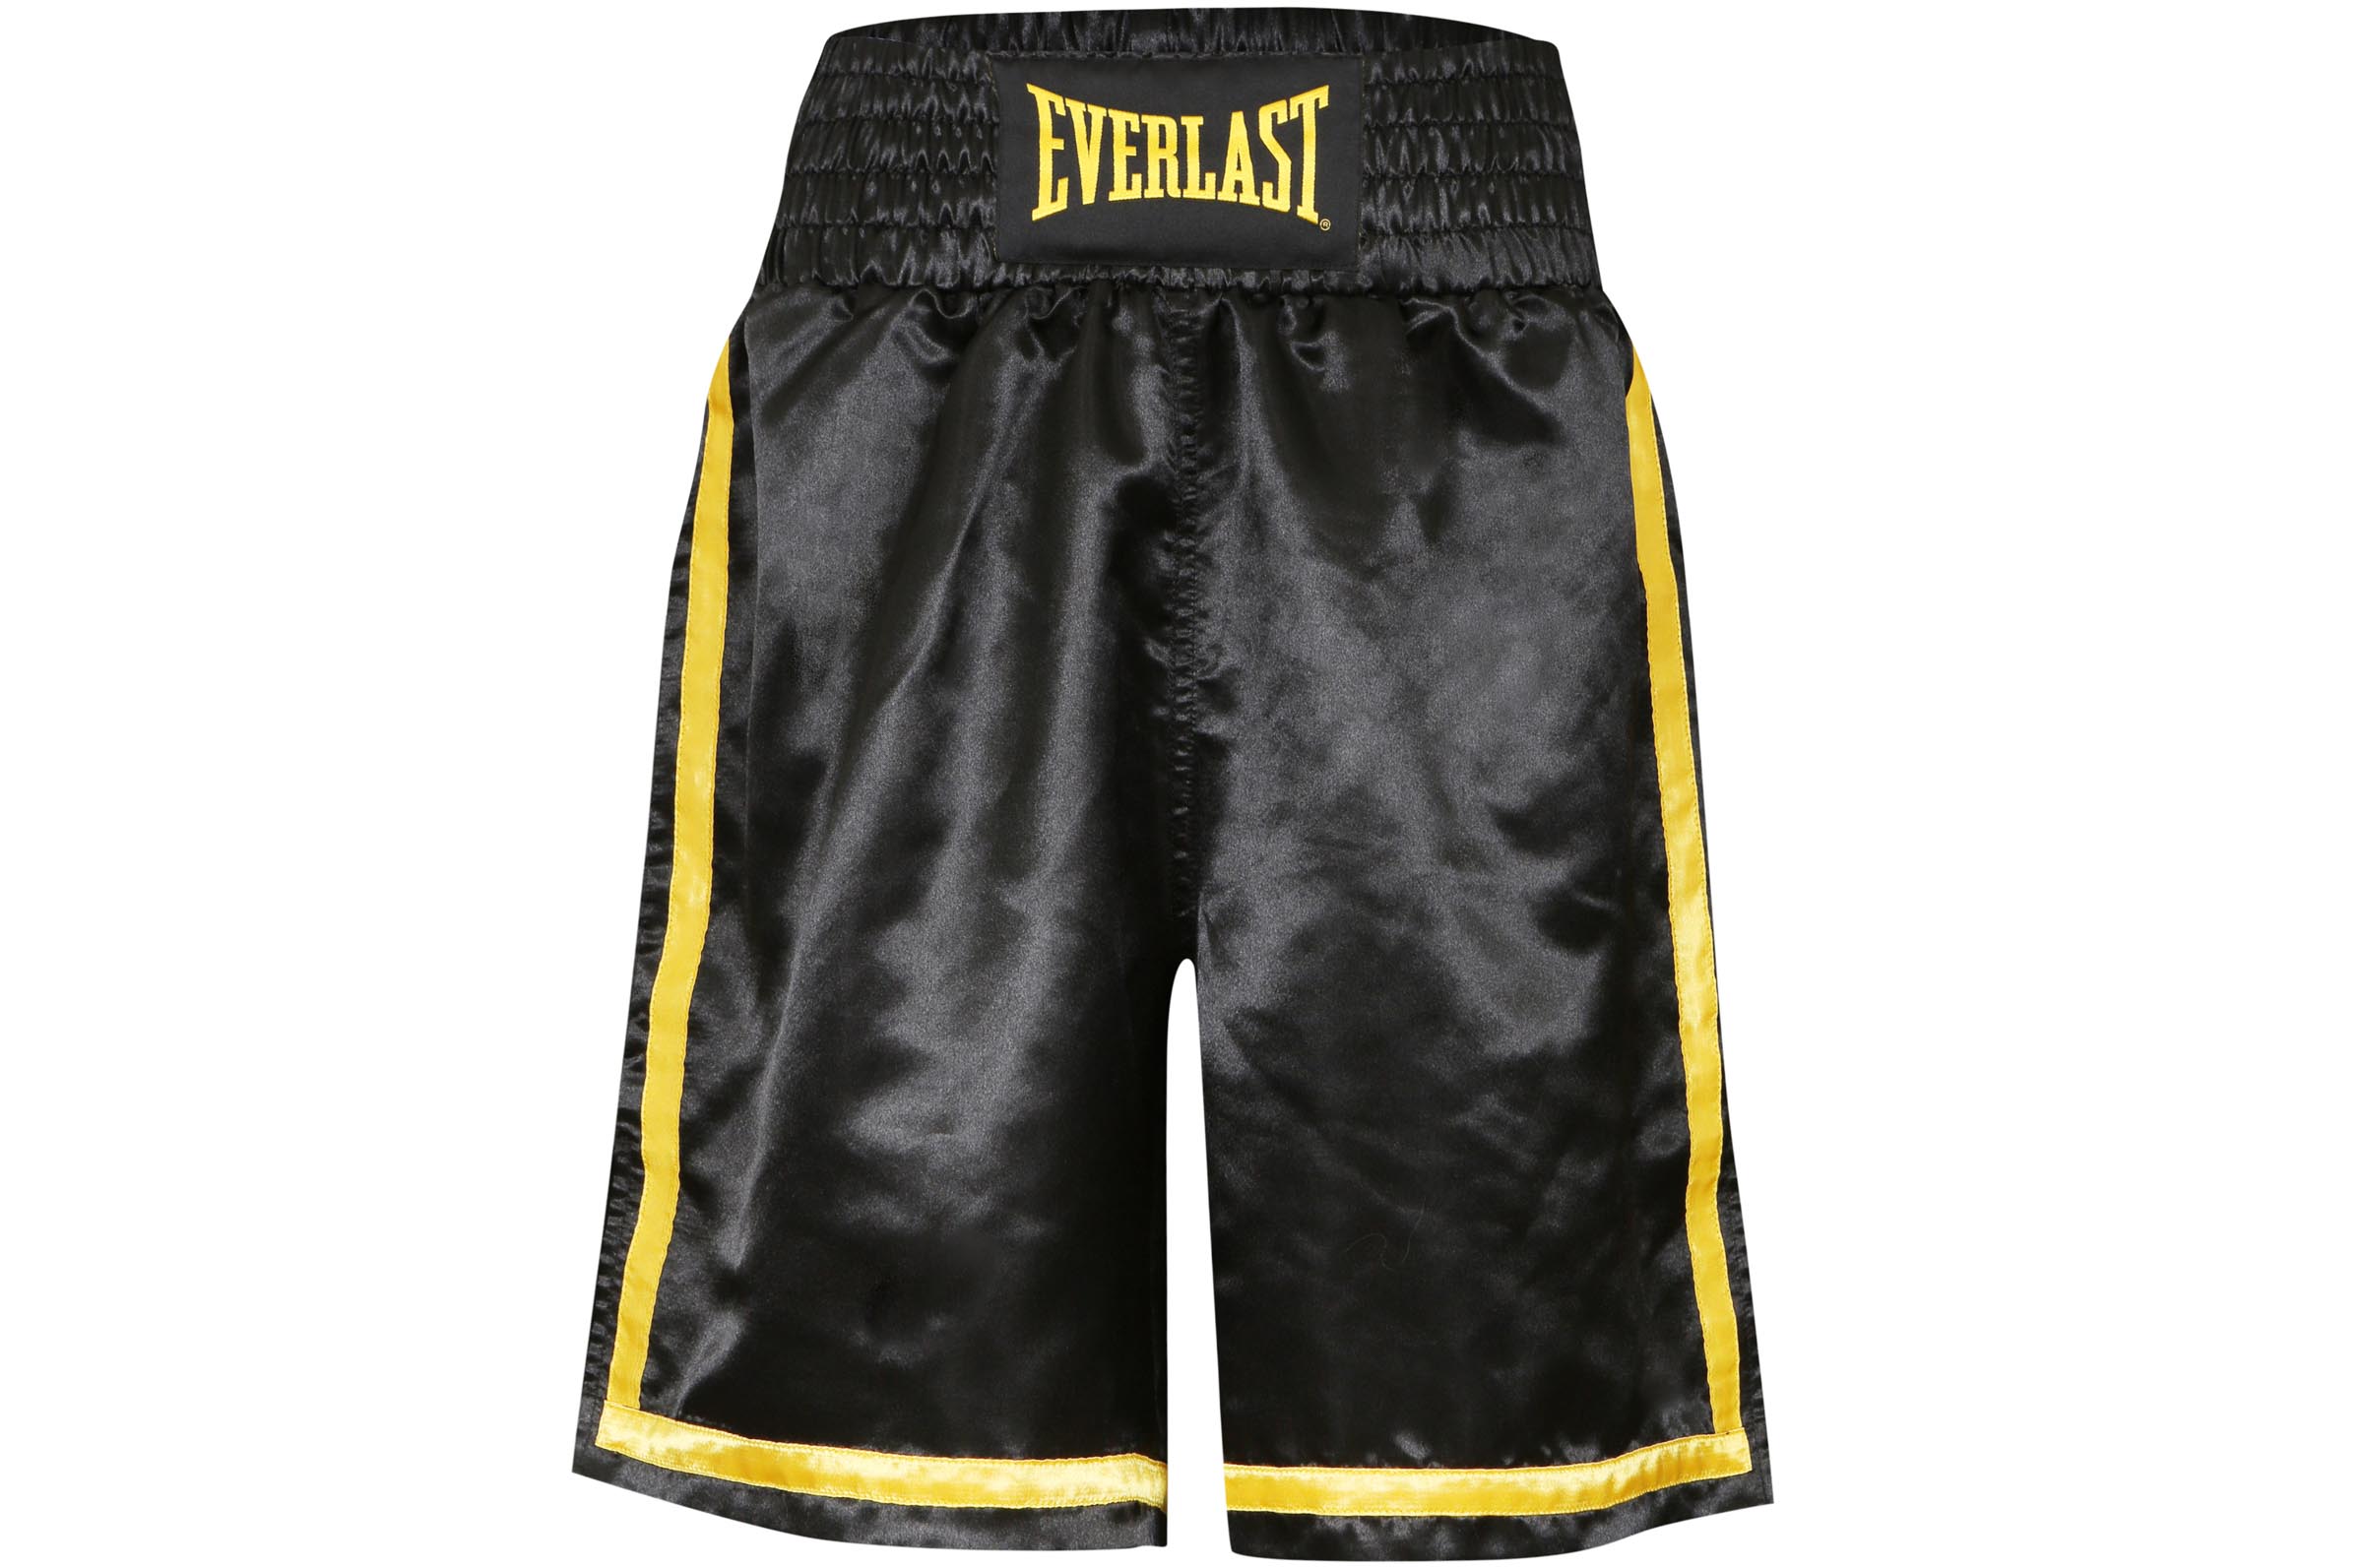 Pantalones cortos de boxeo competición - Sport performance, Everlast DragonSports.eu